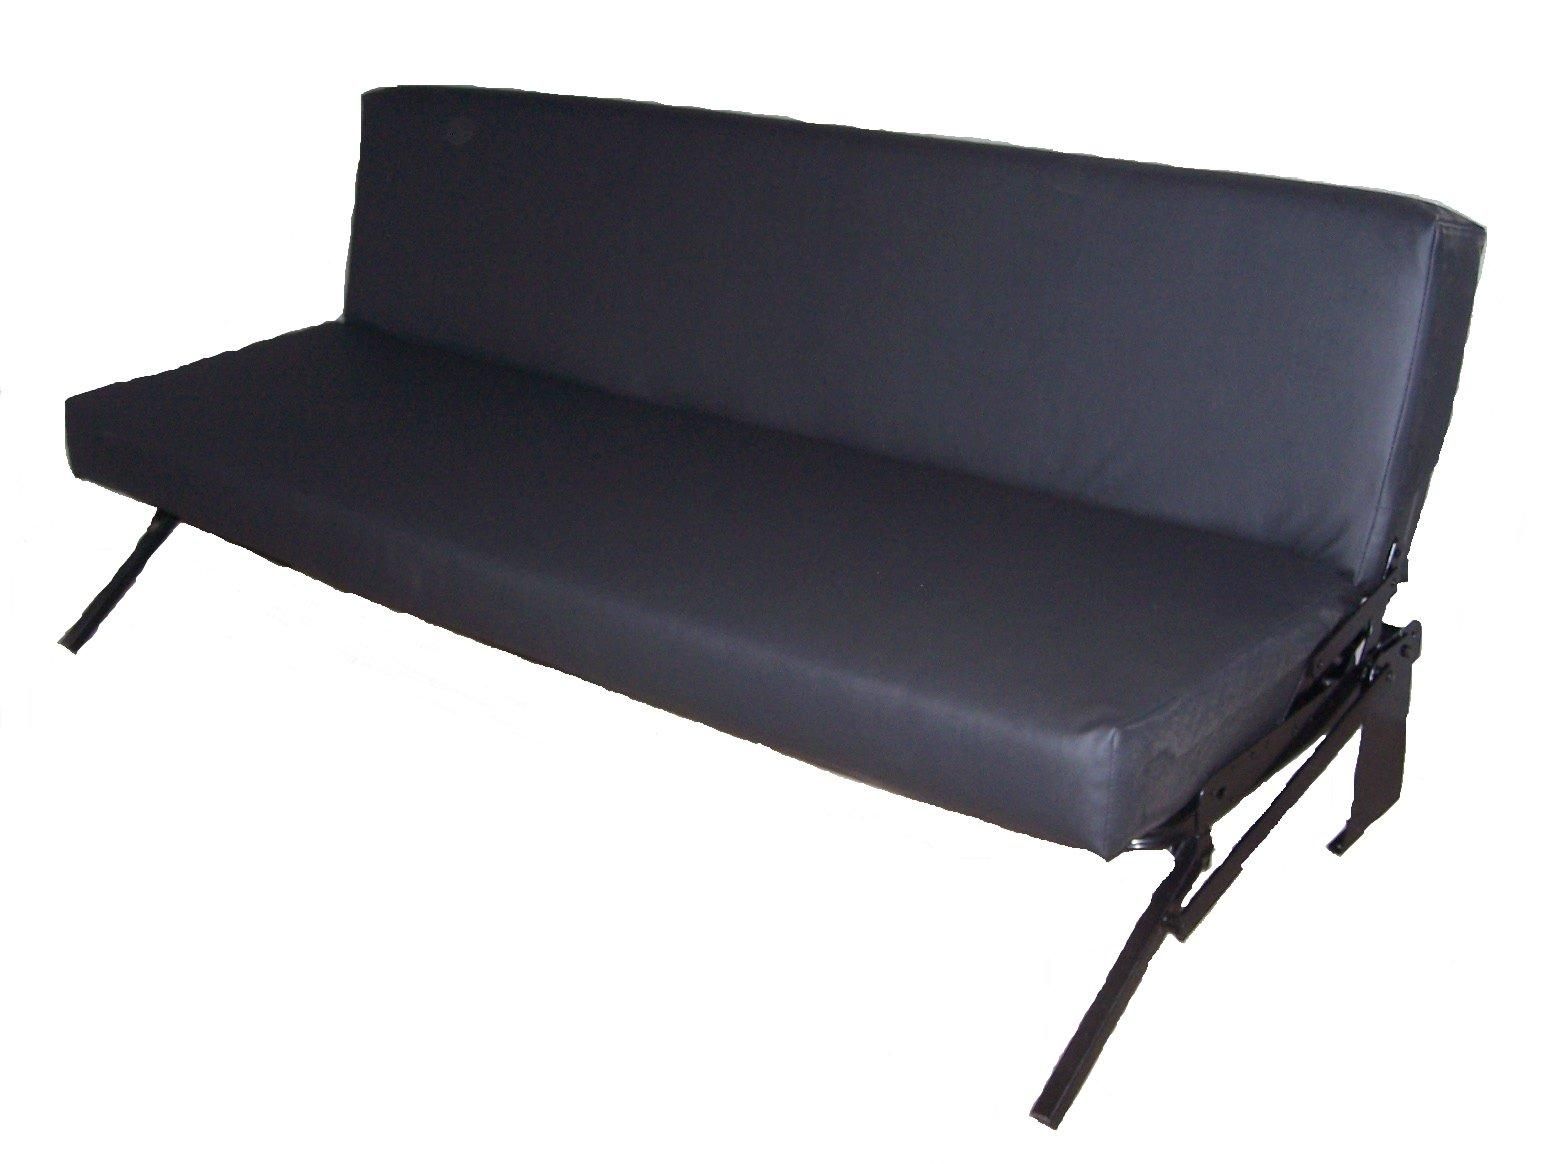 76Toyhauler Pertaining To Folding Sofa Chairs (View 11 of 20)